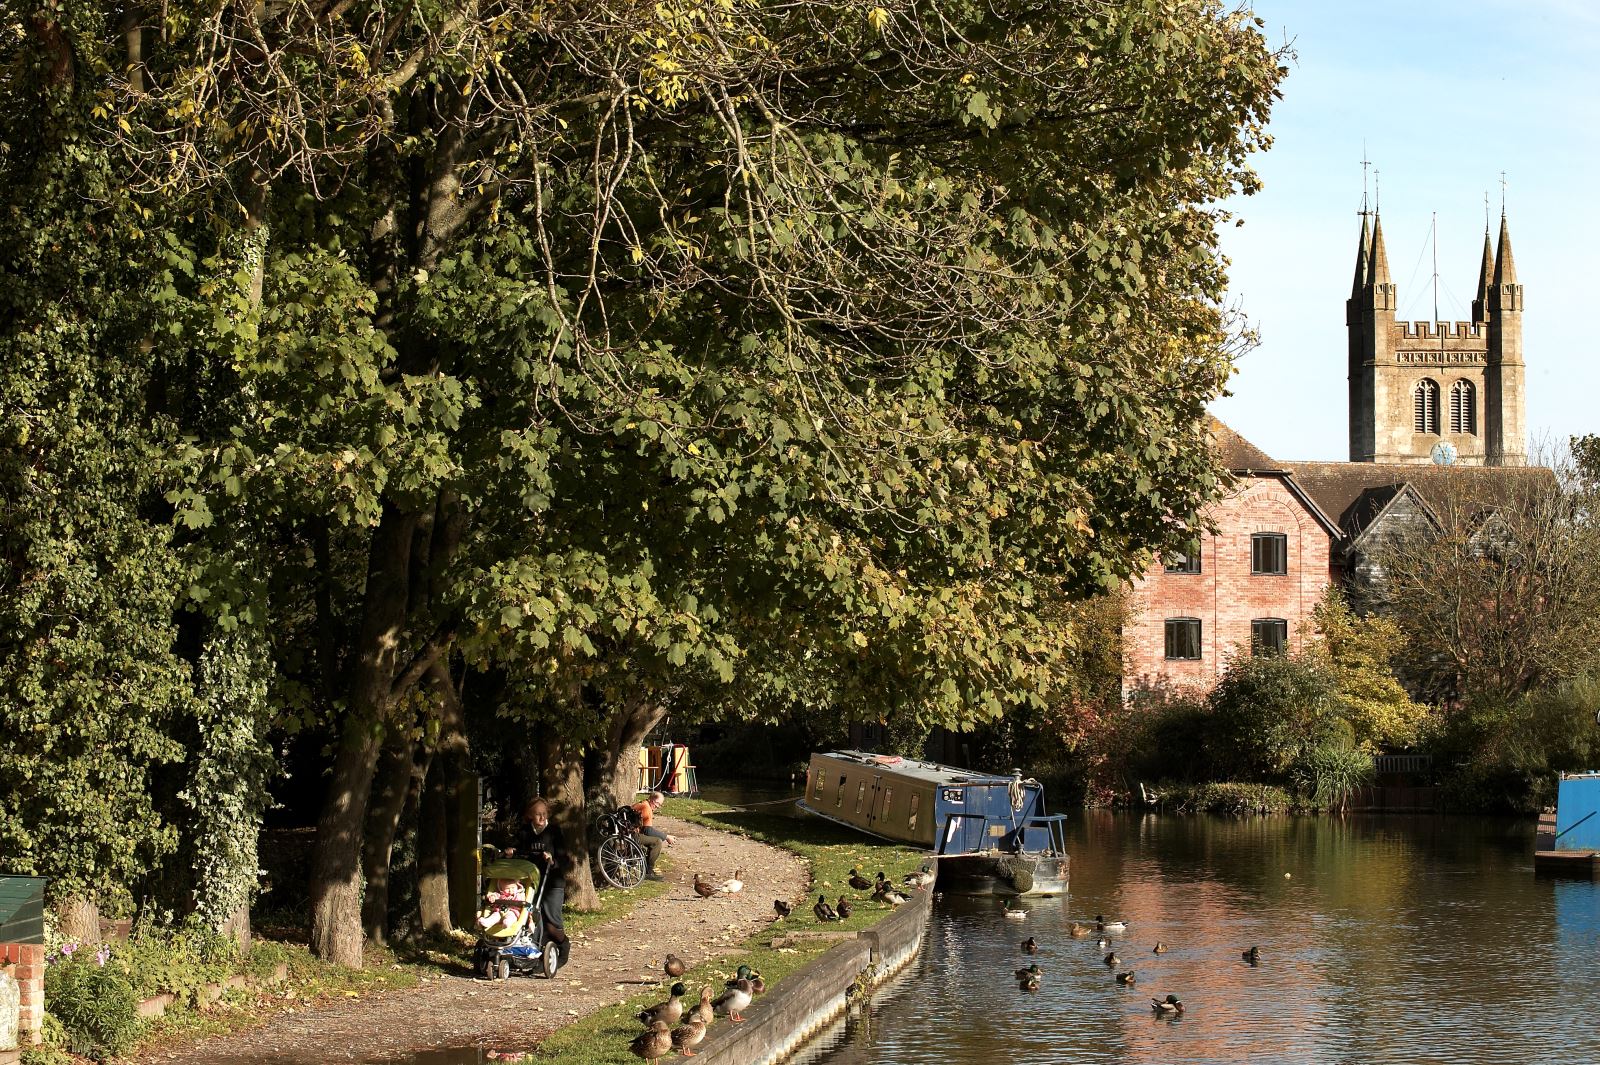 Canal side in Newbury